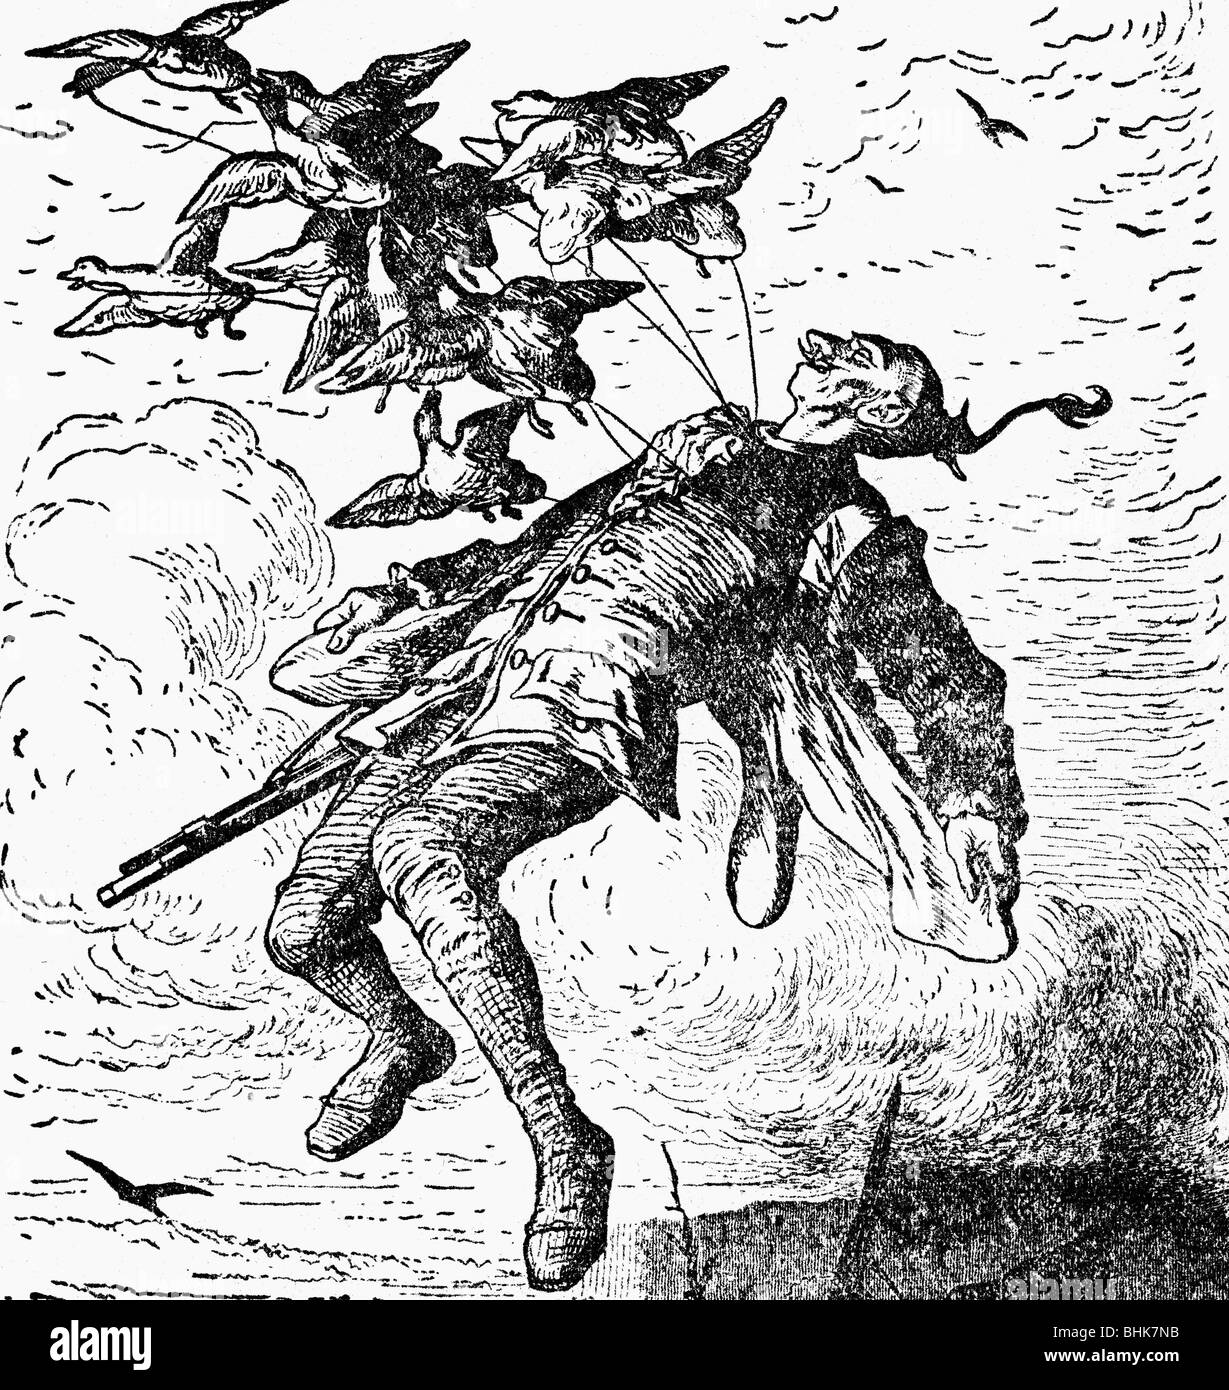 Munchhausen, Karl Friedrich Hieronymus von, 11.5.1720 - 22.2.1797, German officer, adventures, is lifted in the air by ducks, wood engraving, 1874, , Stock Photo